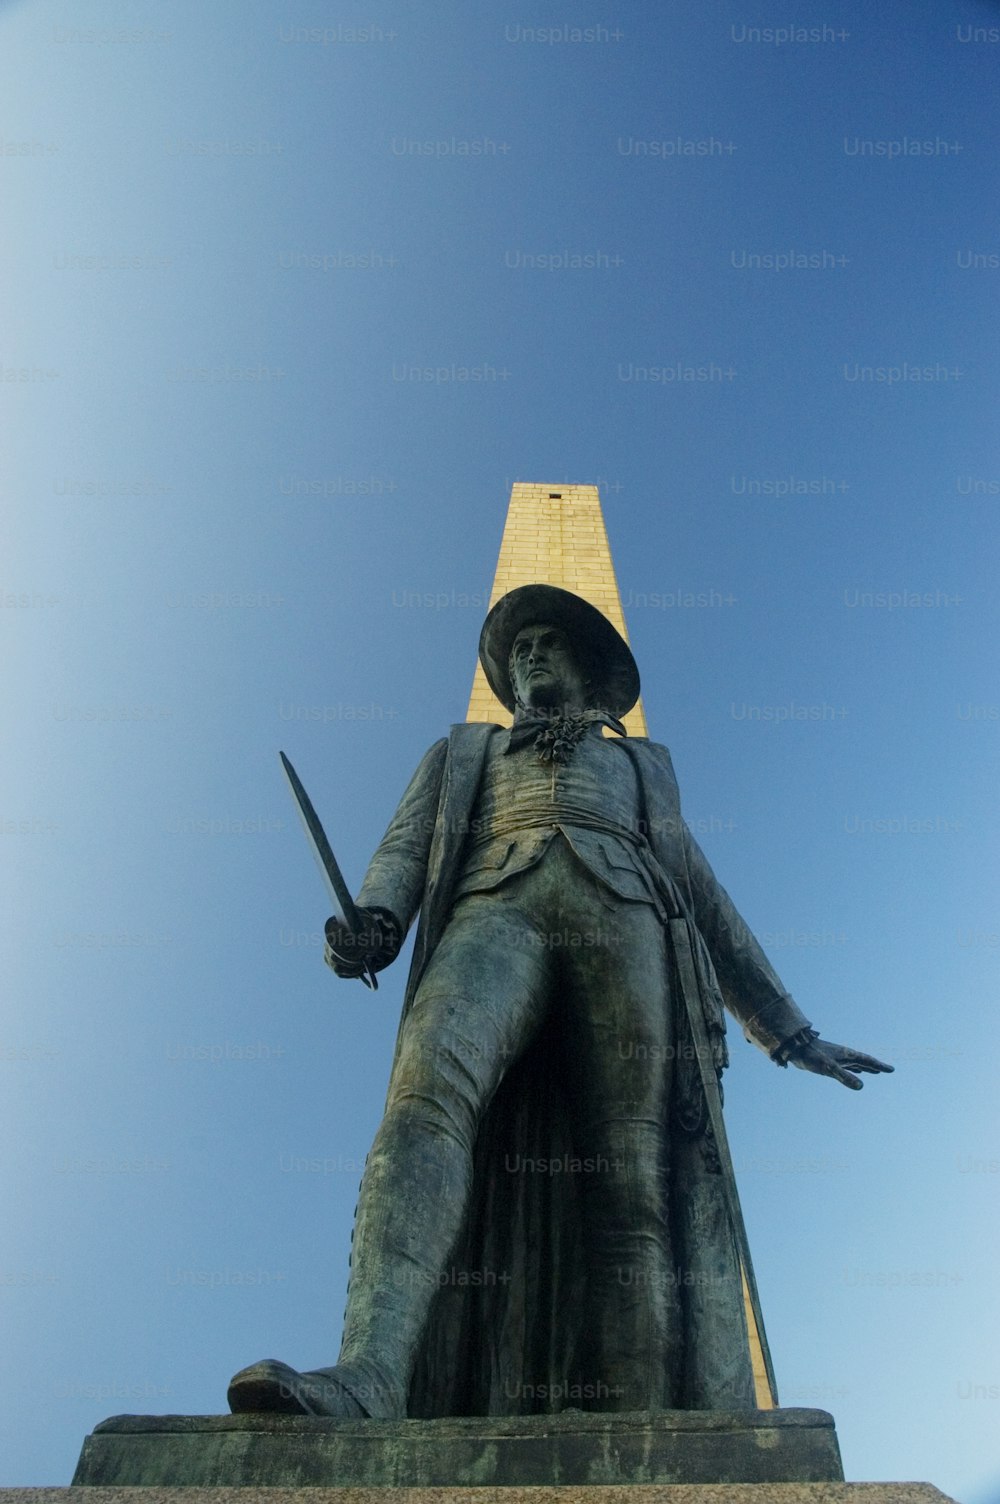 Una estatua de un hombre sosteniendo una espada